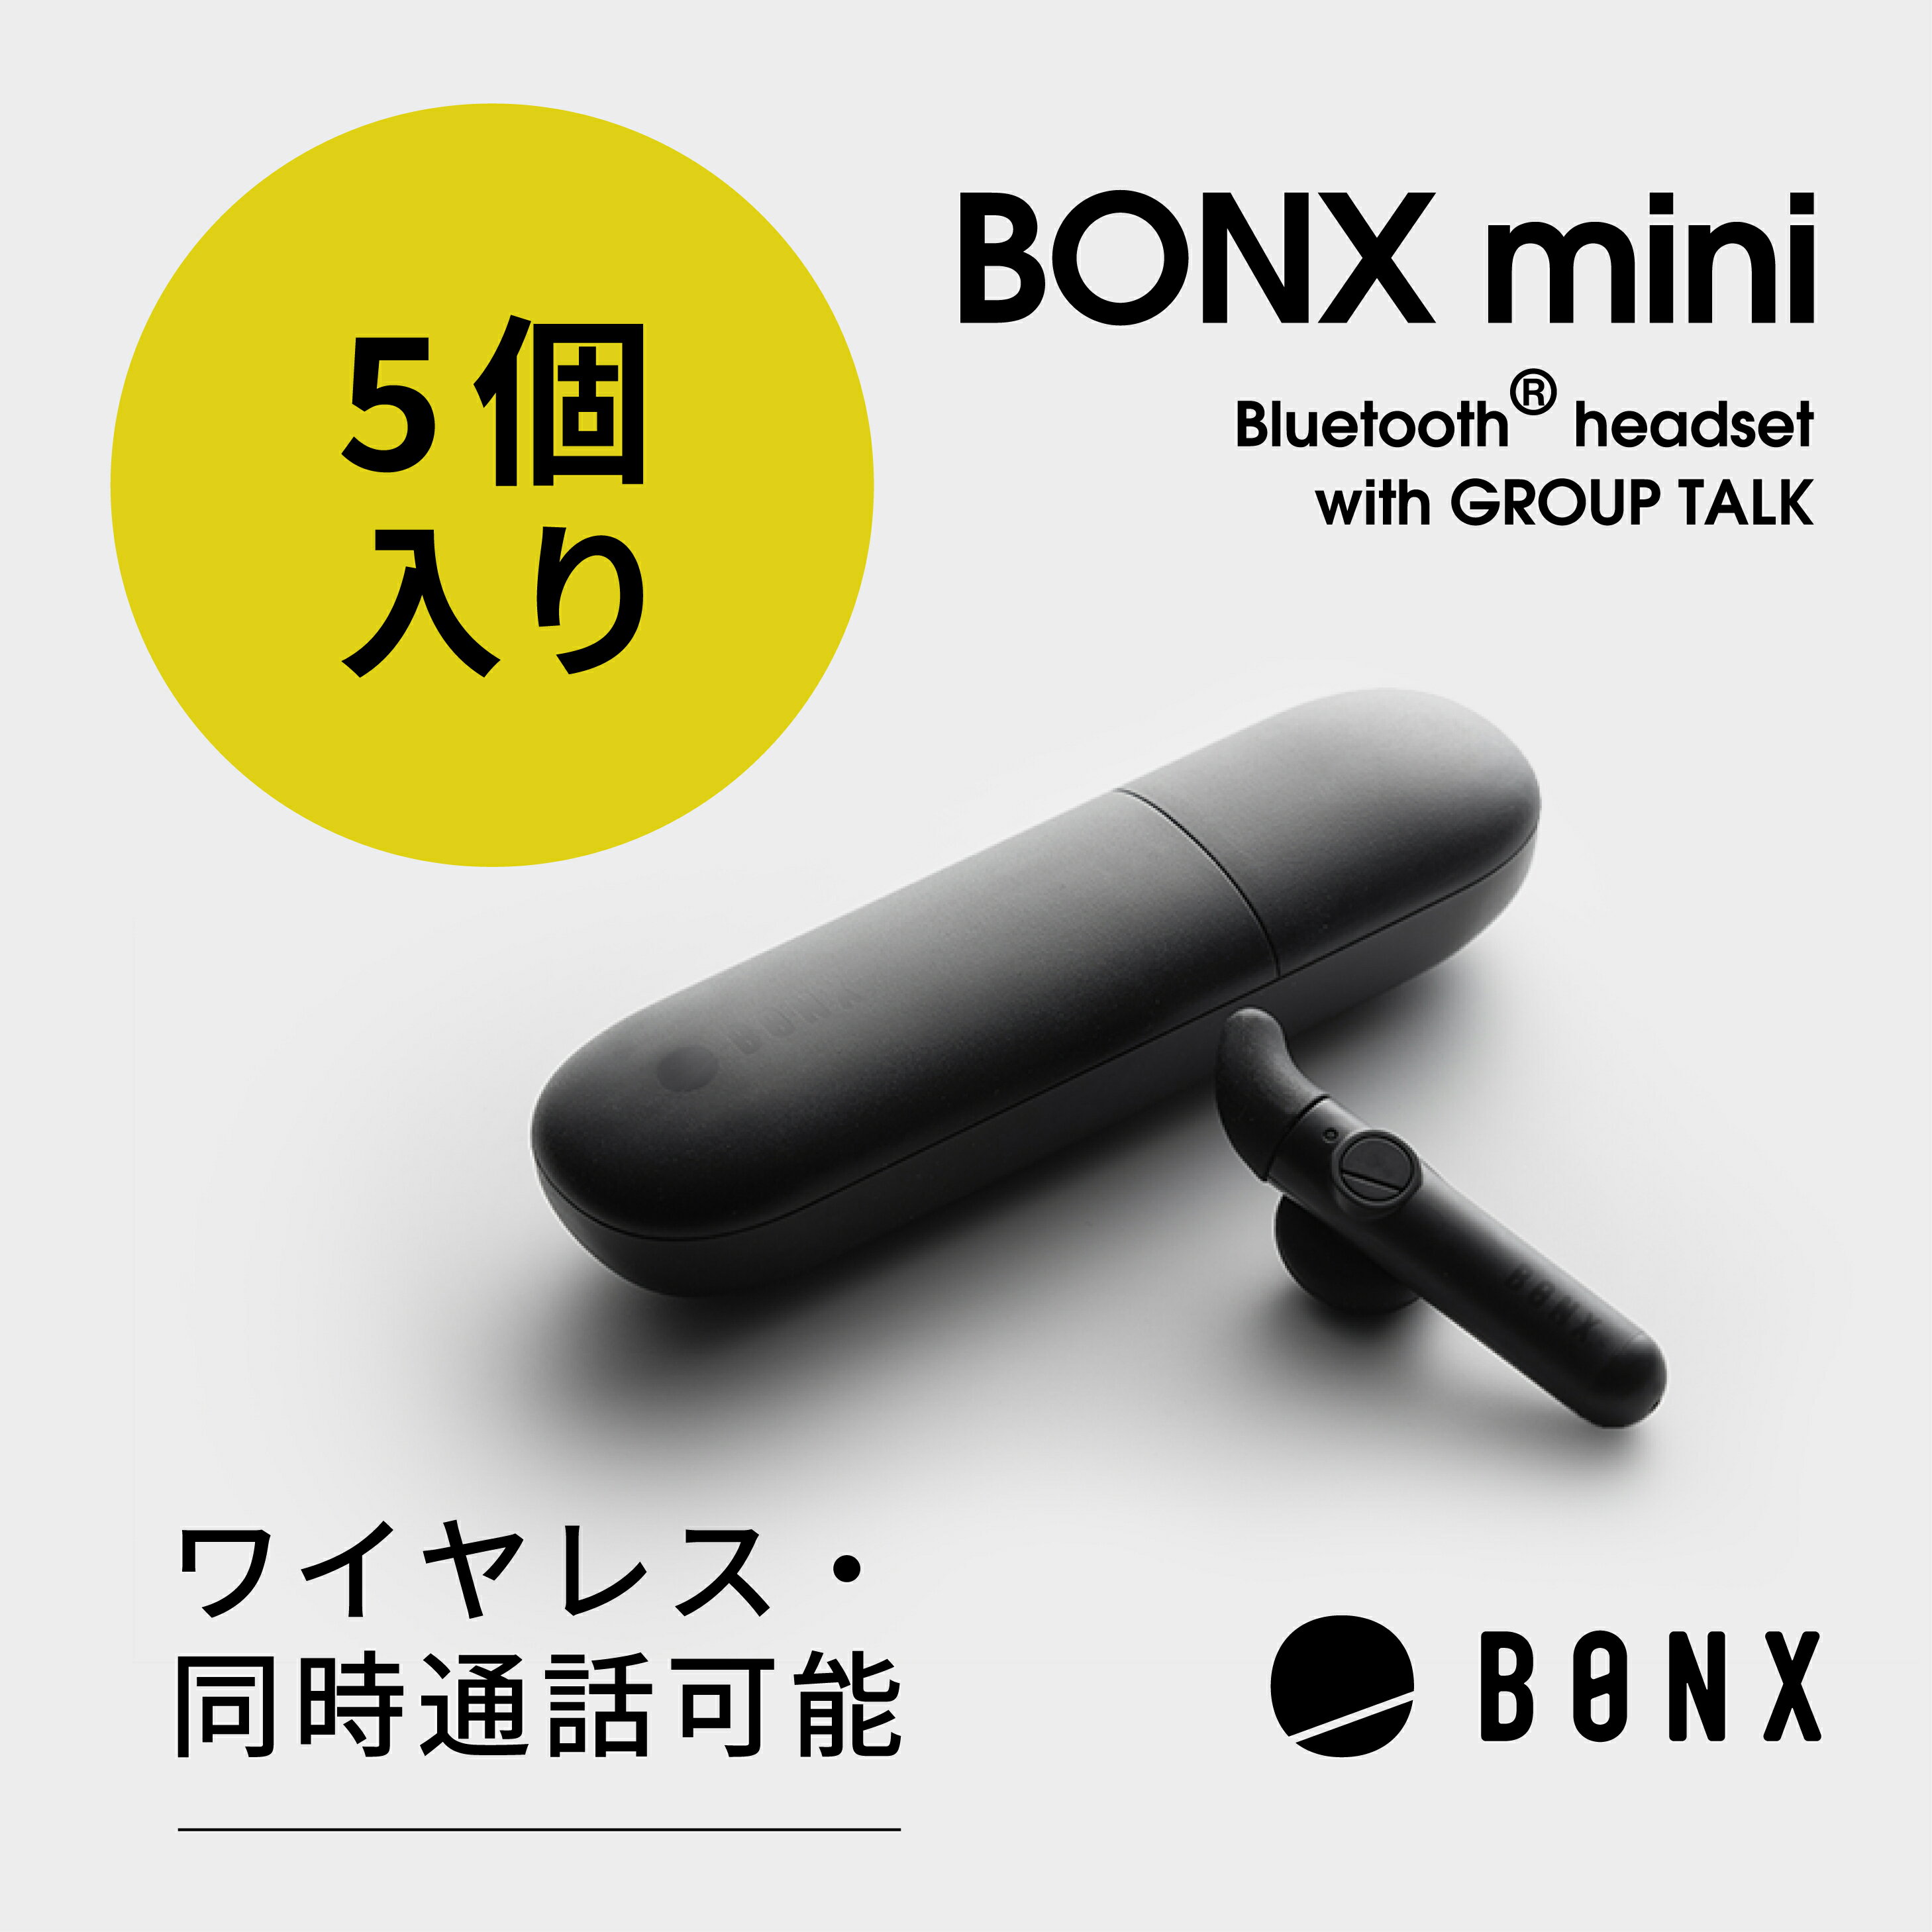  BONX ({NX)  VpbP[W  CJ CX gV[o[ ^ ʘb Bluetooth u[gD[X  @ gV[o[ Ɩp CJ BONX mini